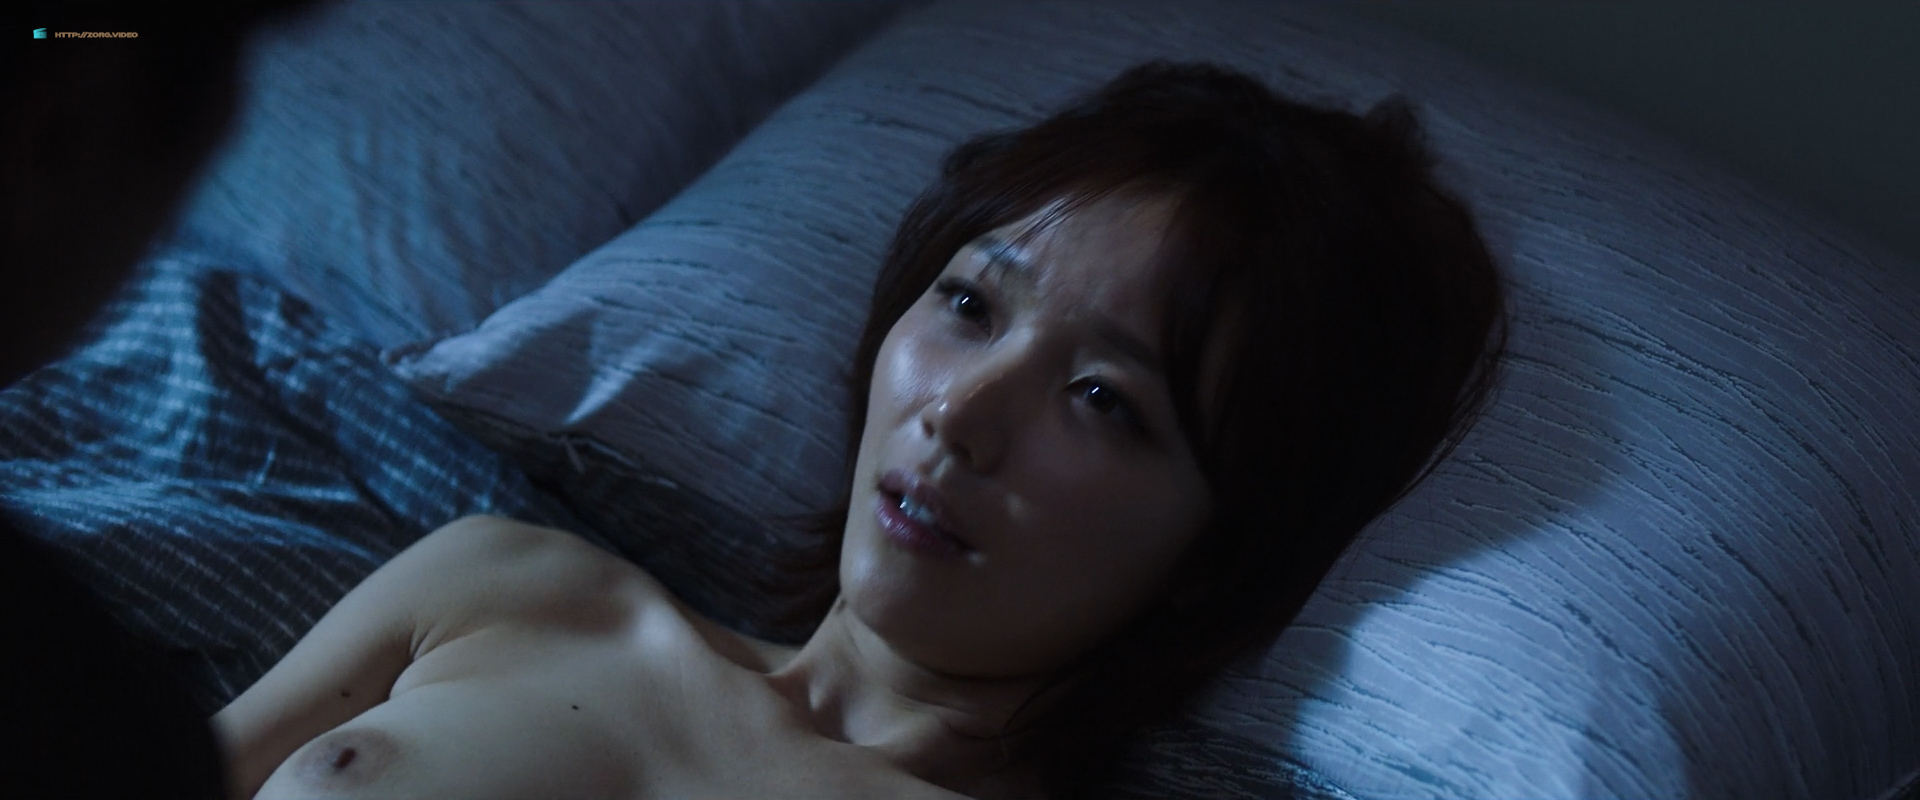 Kim-Kyu-seon-nude-an. 